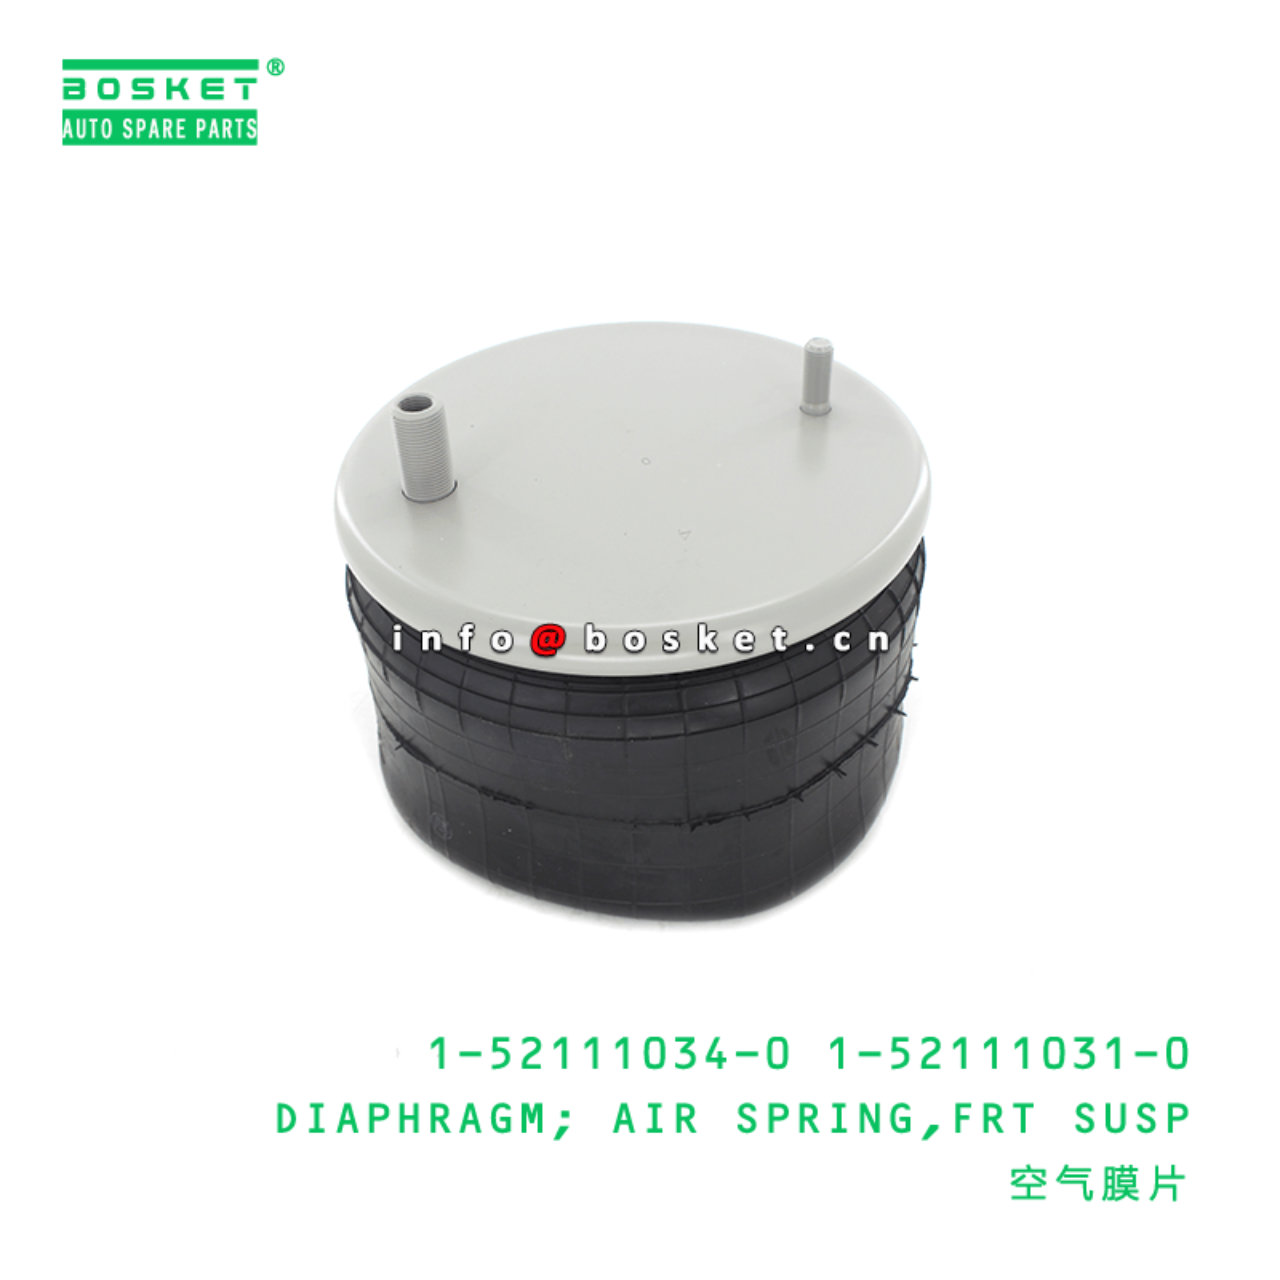 1-52111034-0 1-52111031-0 Front Suspension Air Spring Diaphragm 1521110340 1521110310 Suitable for I